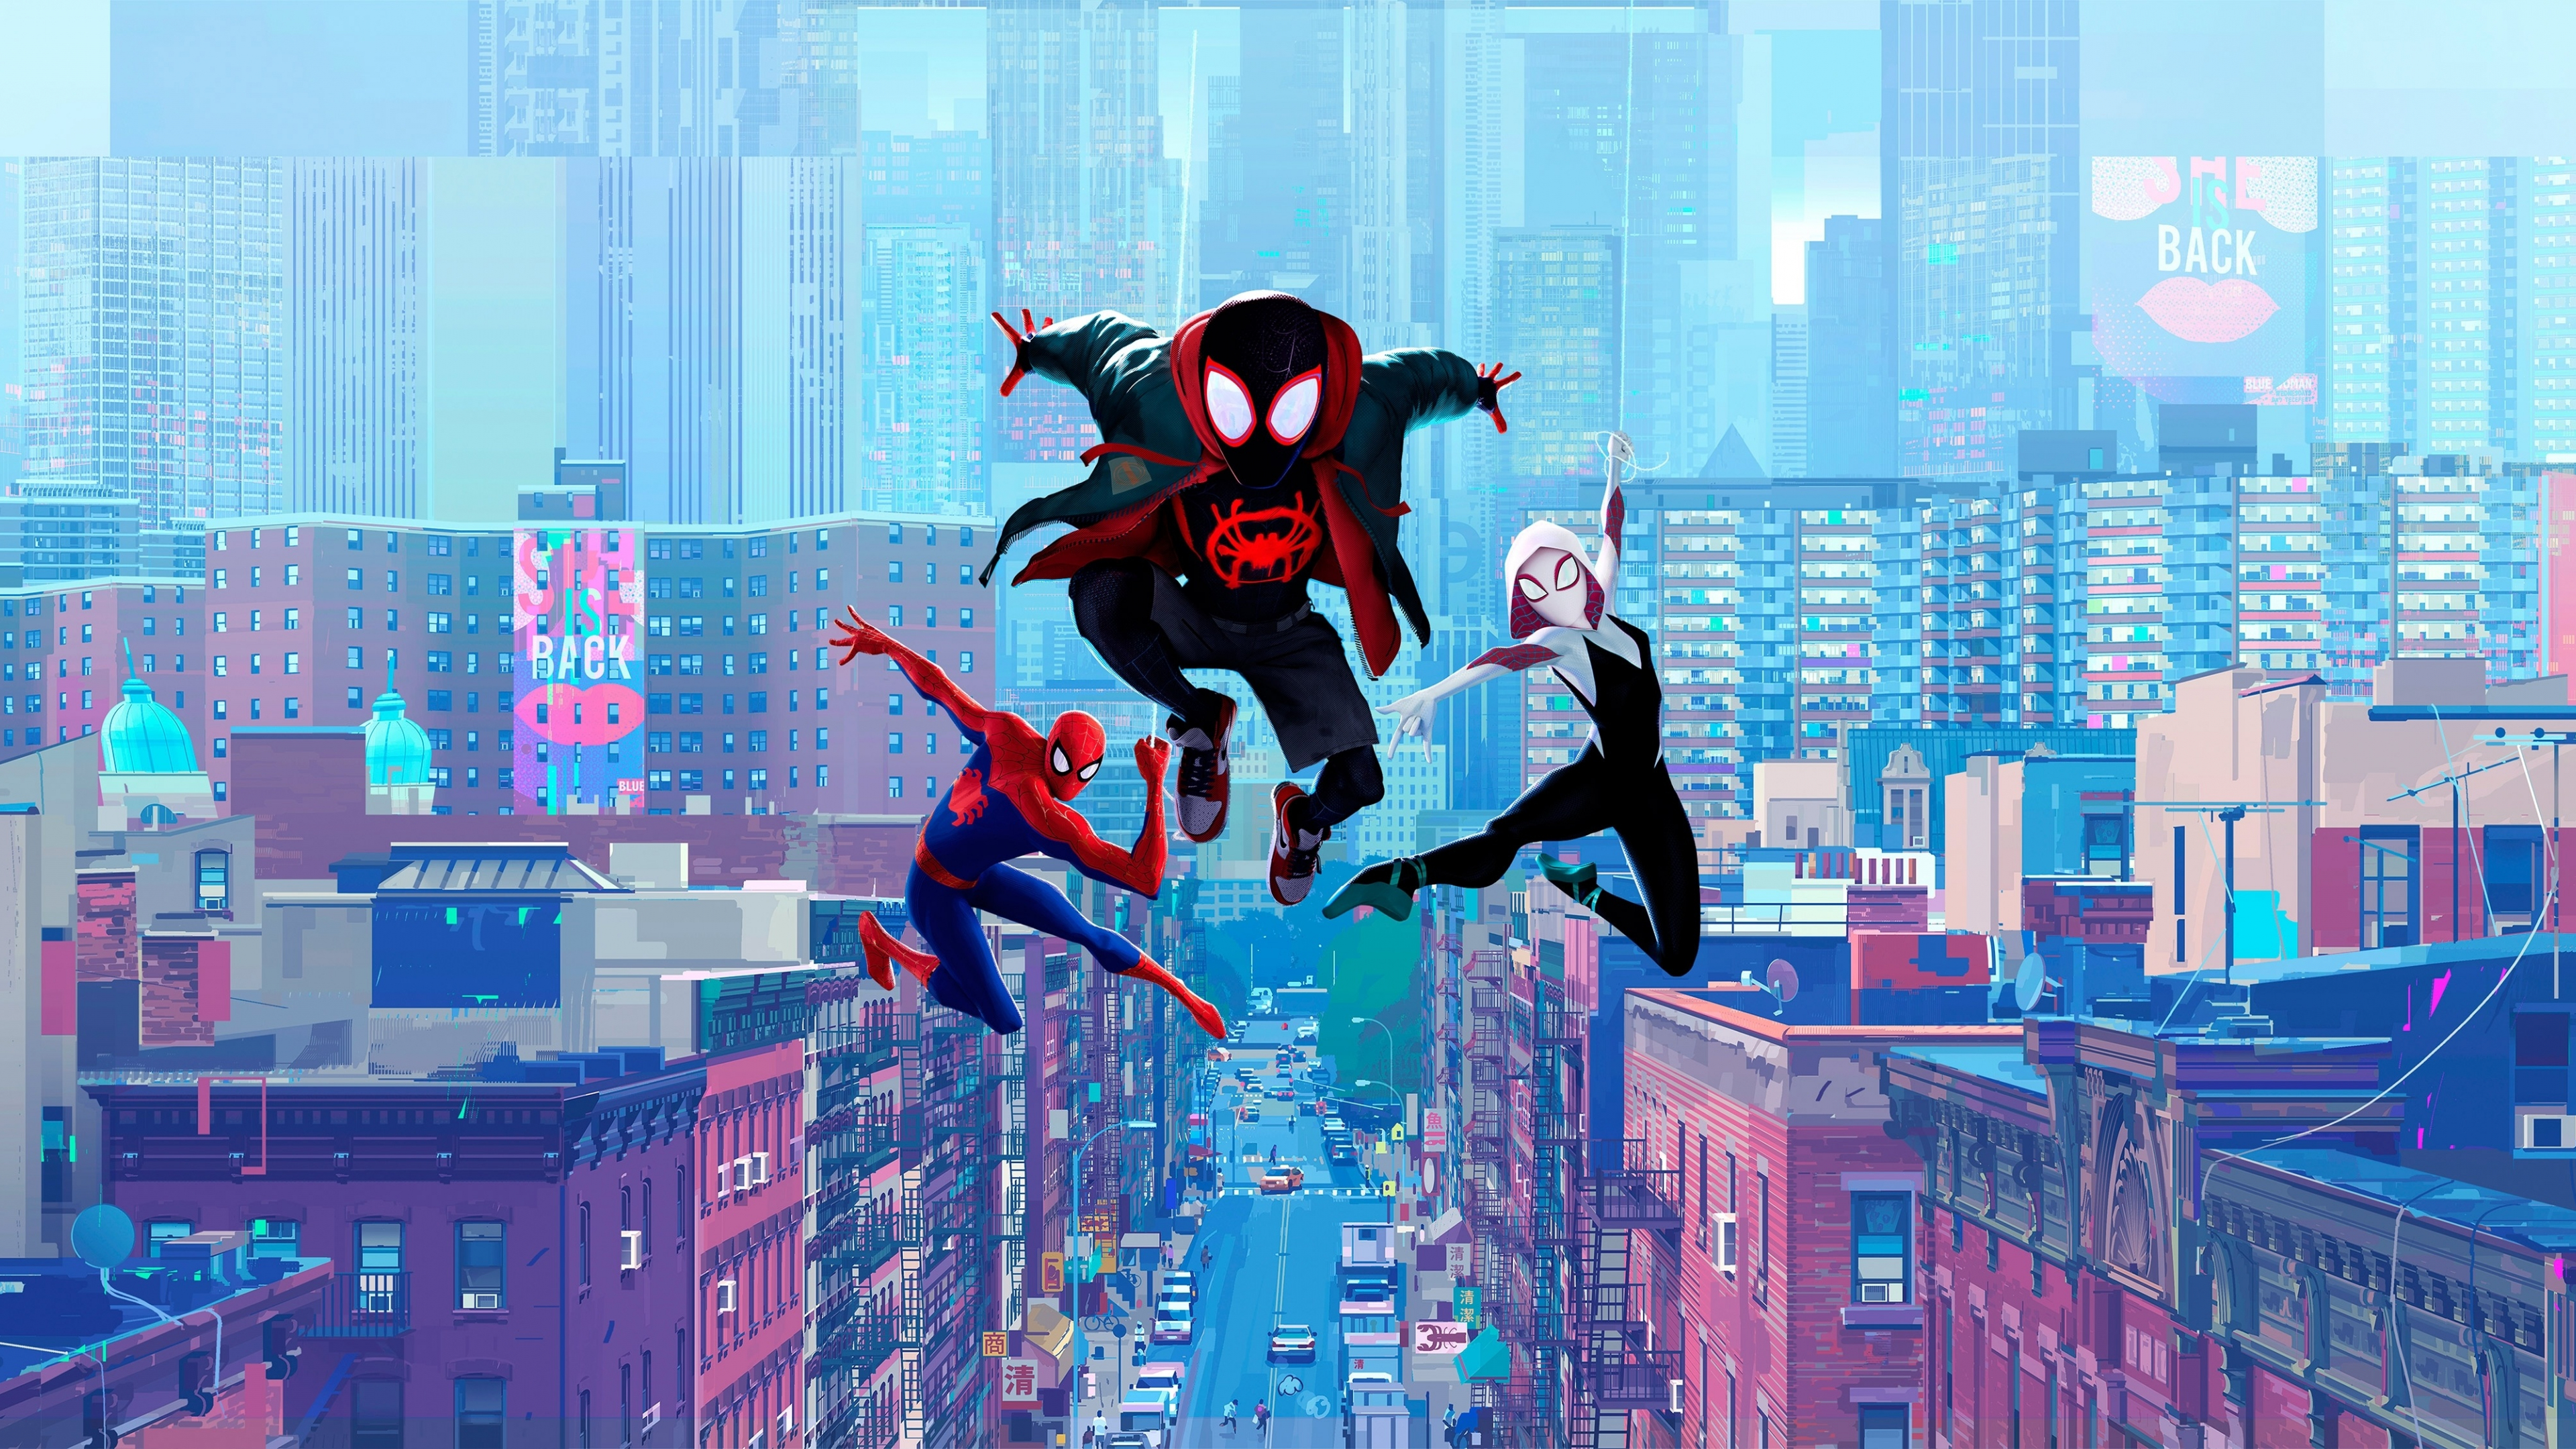 Download 3840x2160 Wallpaper Movie Fan Art Spider Man